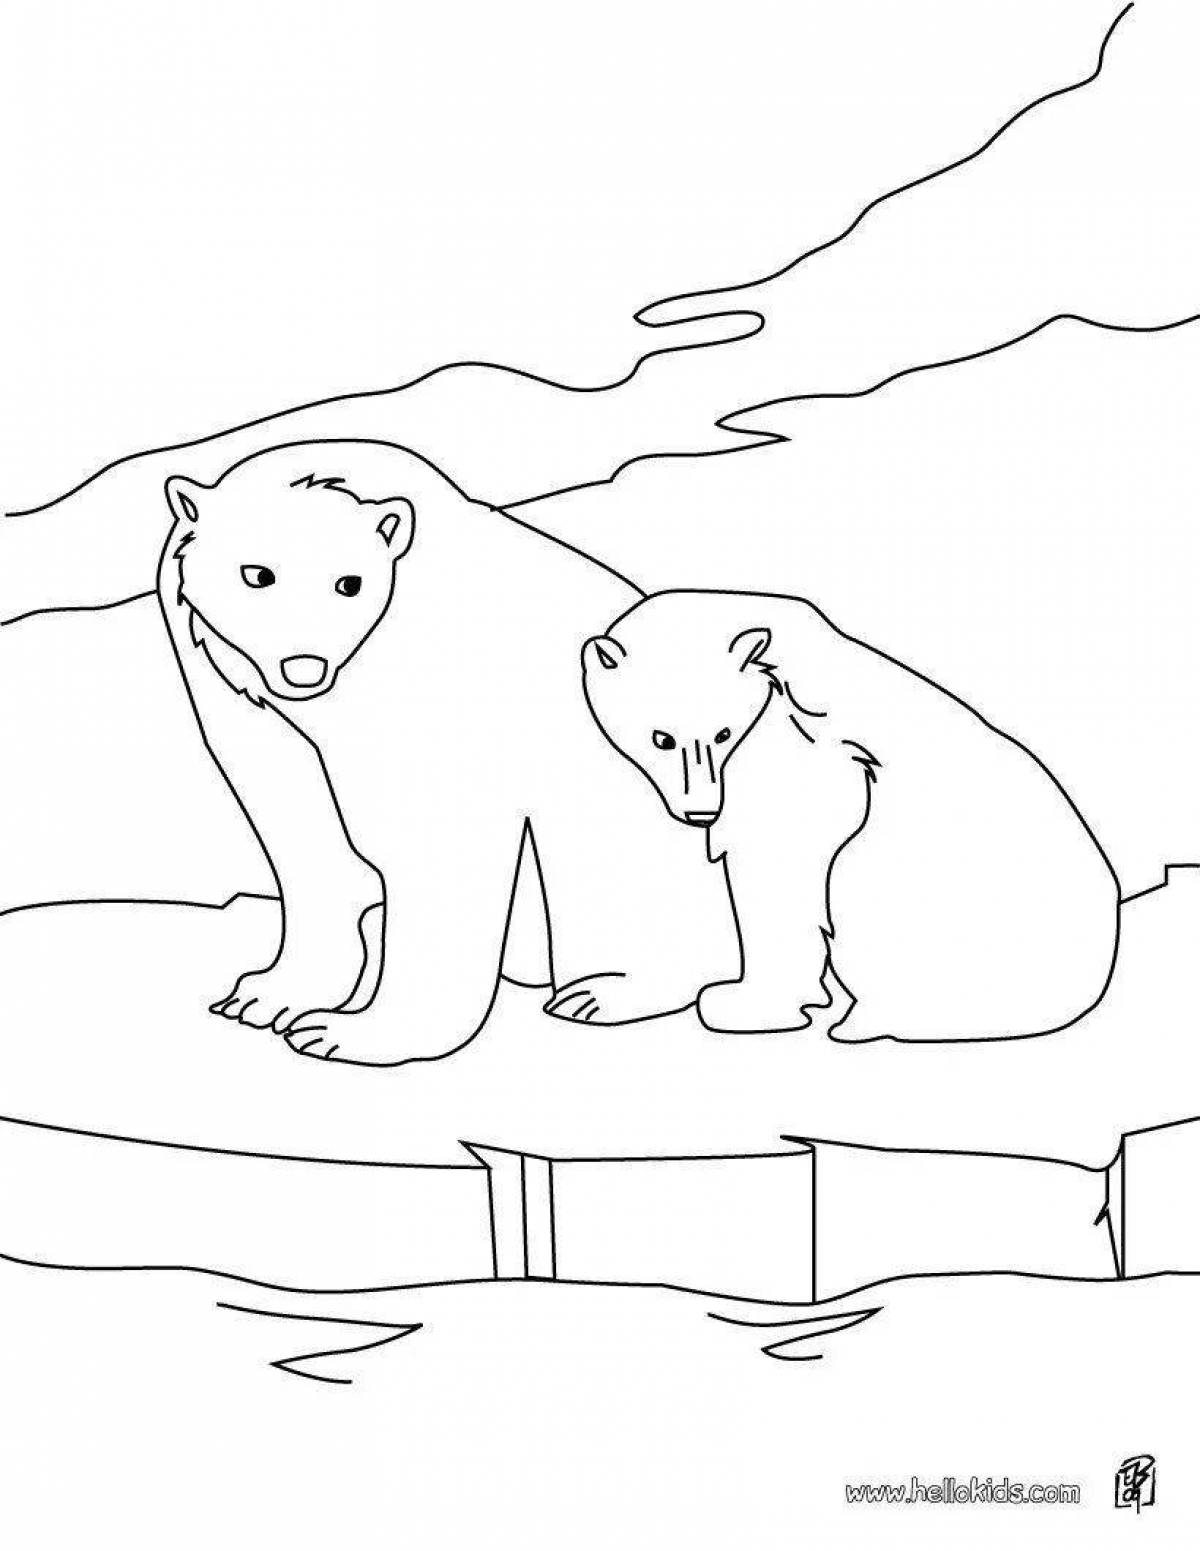 Naughty polar bear drawing